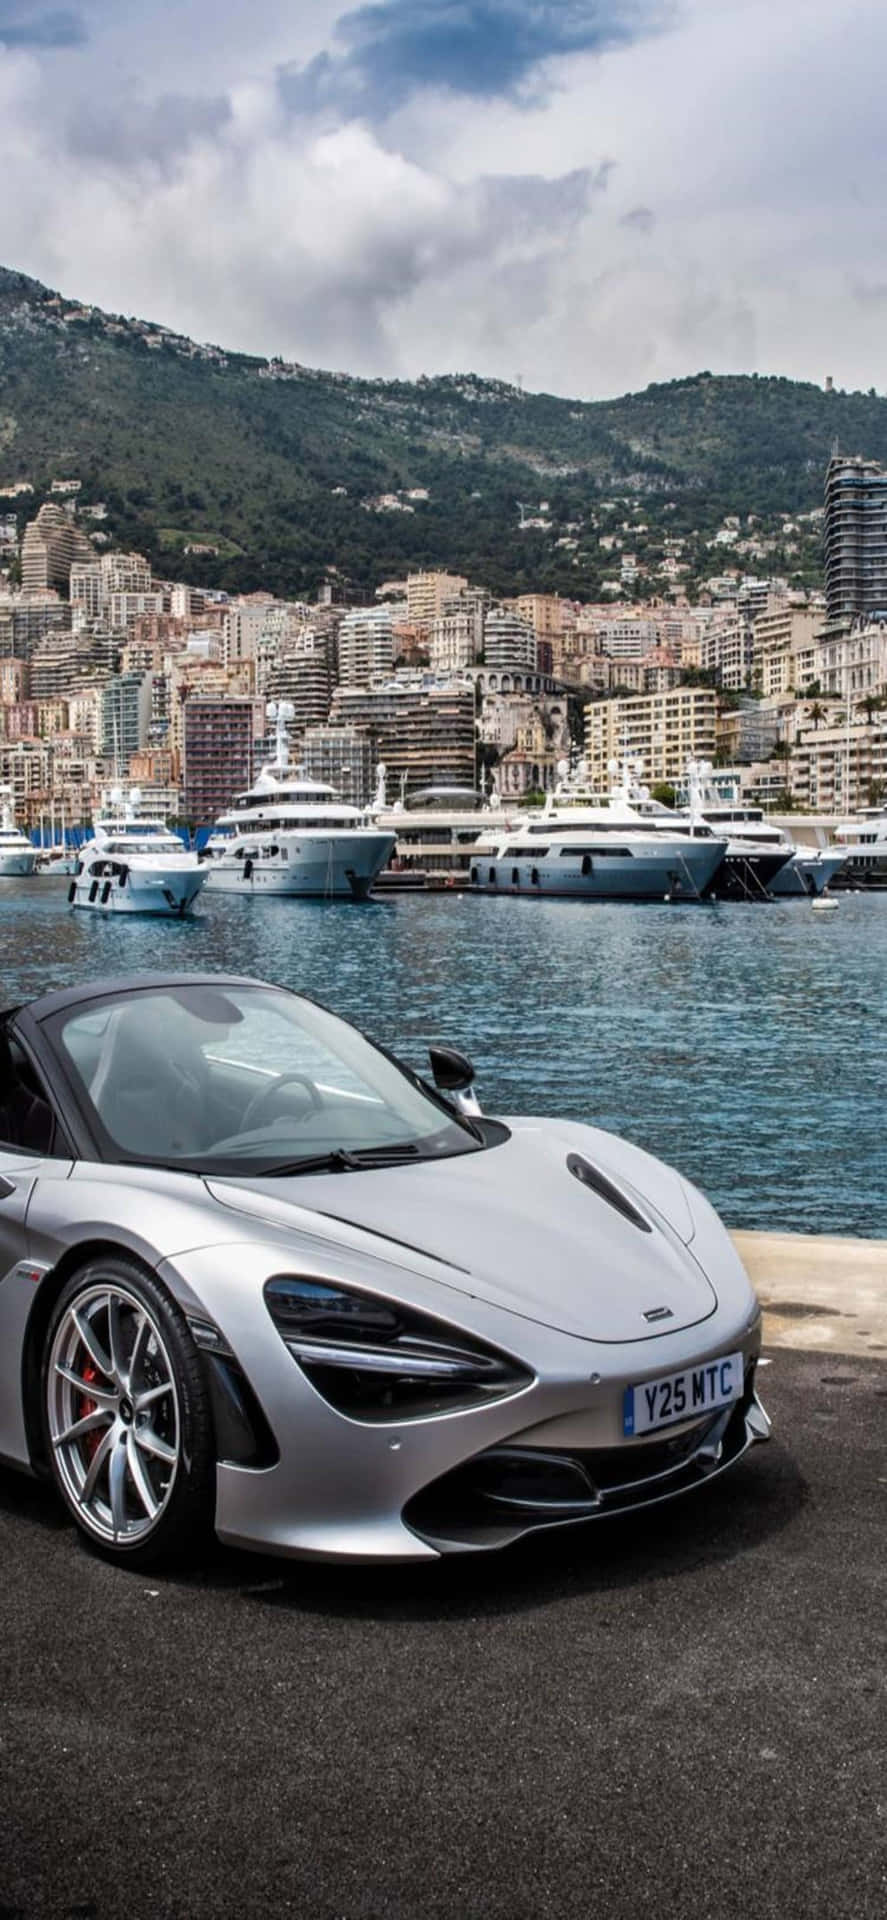 Iphone X Mclaren 720s Monte Carlo Background